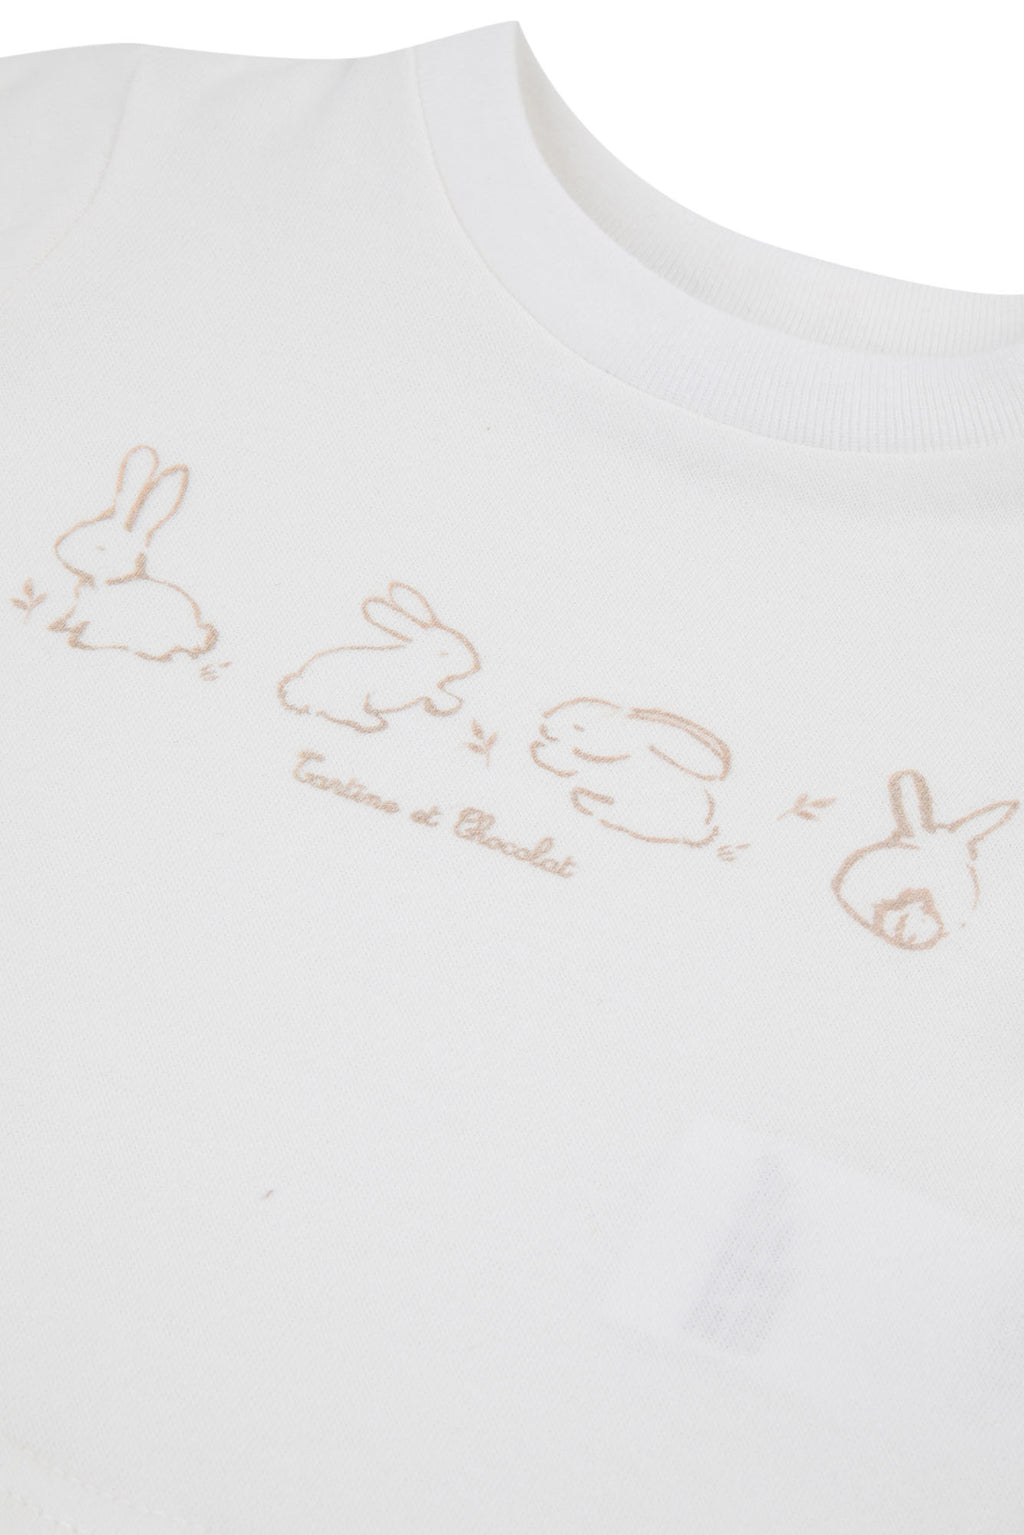 T -Shirt - Ecru Illustration Kaninchen